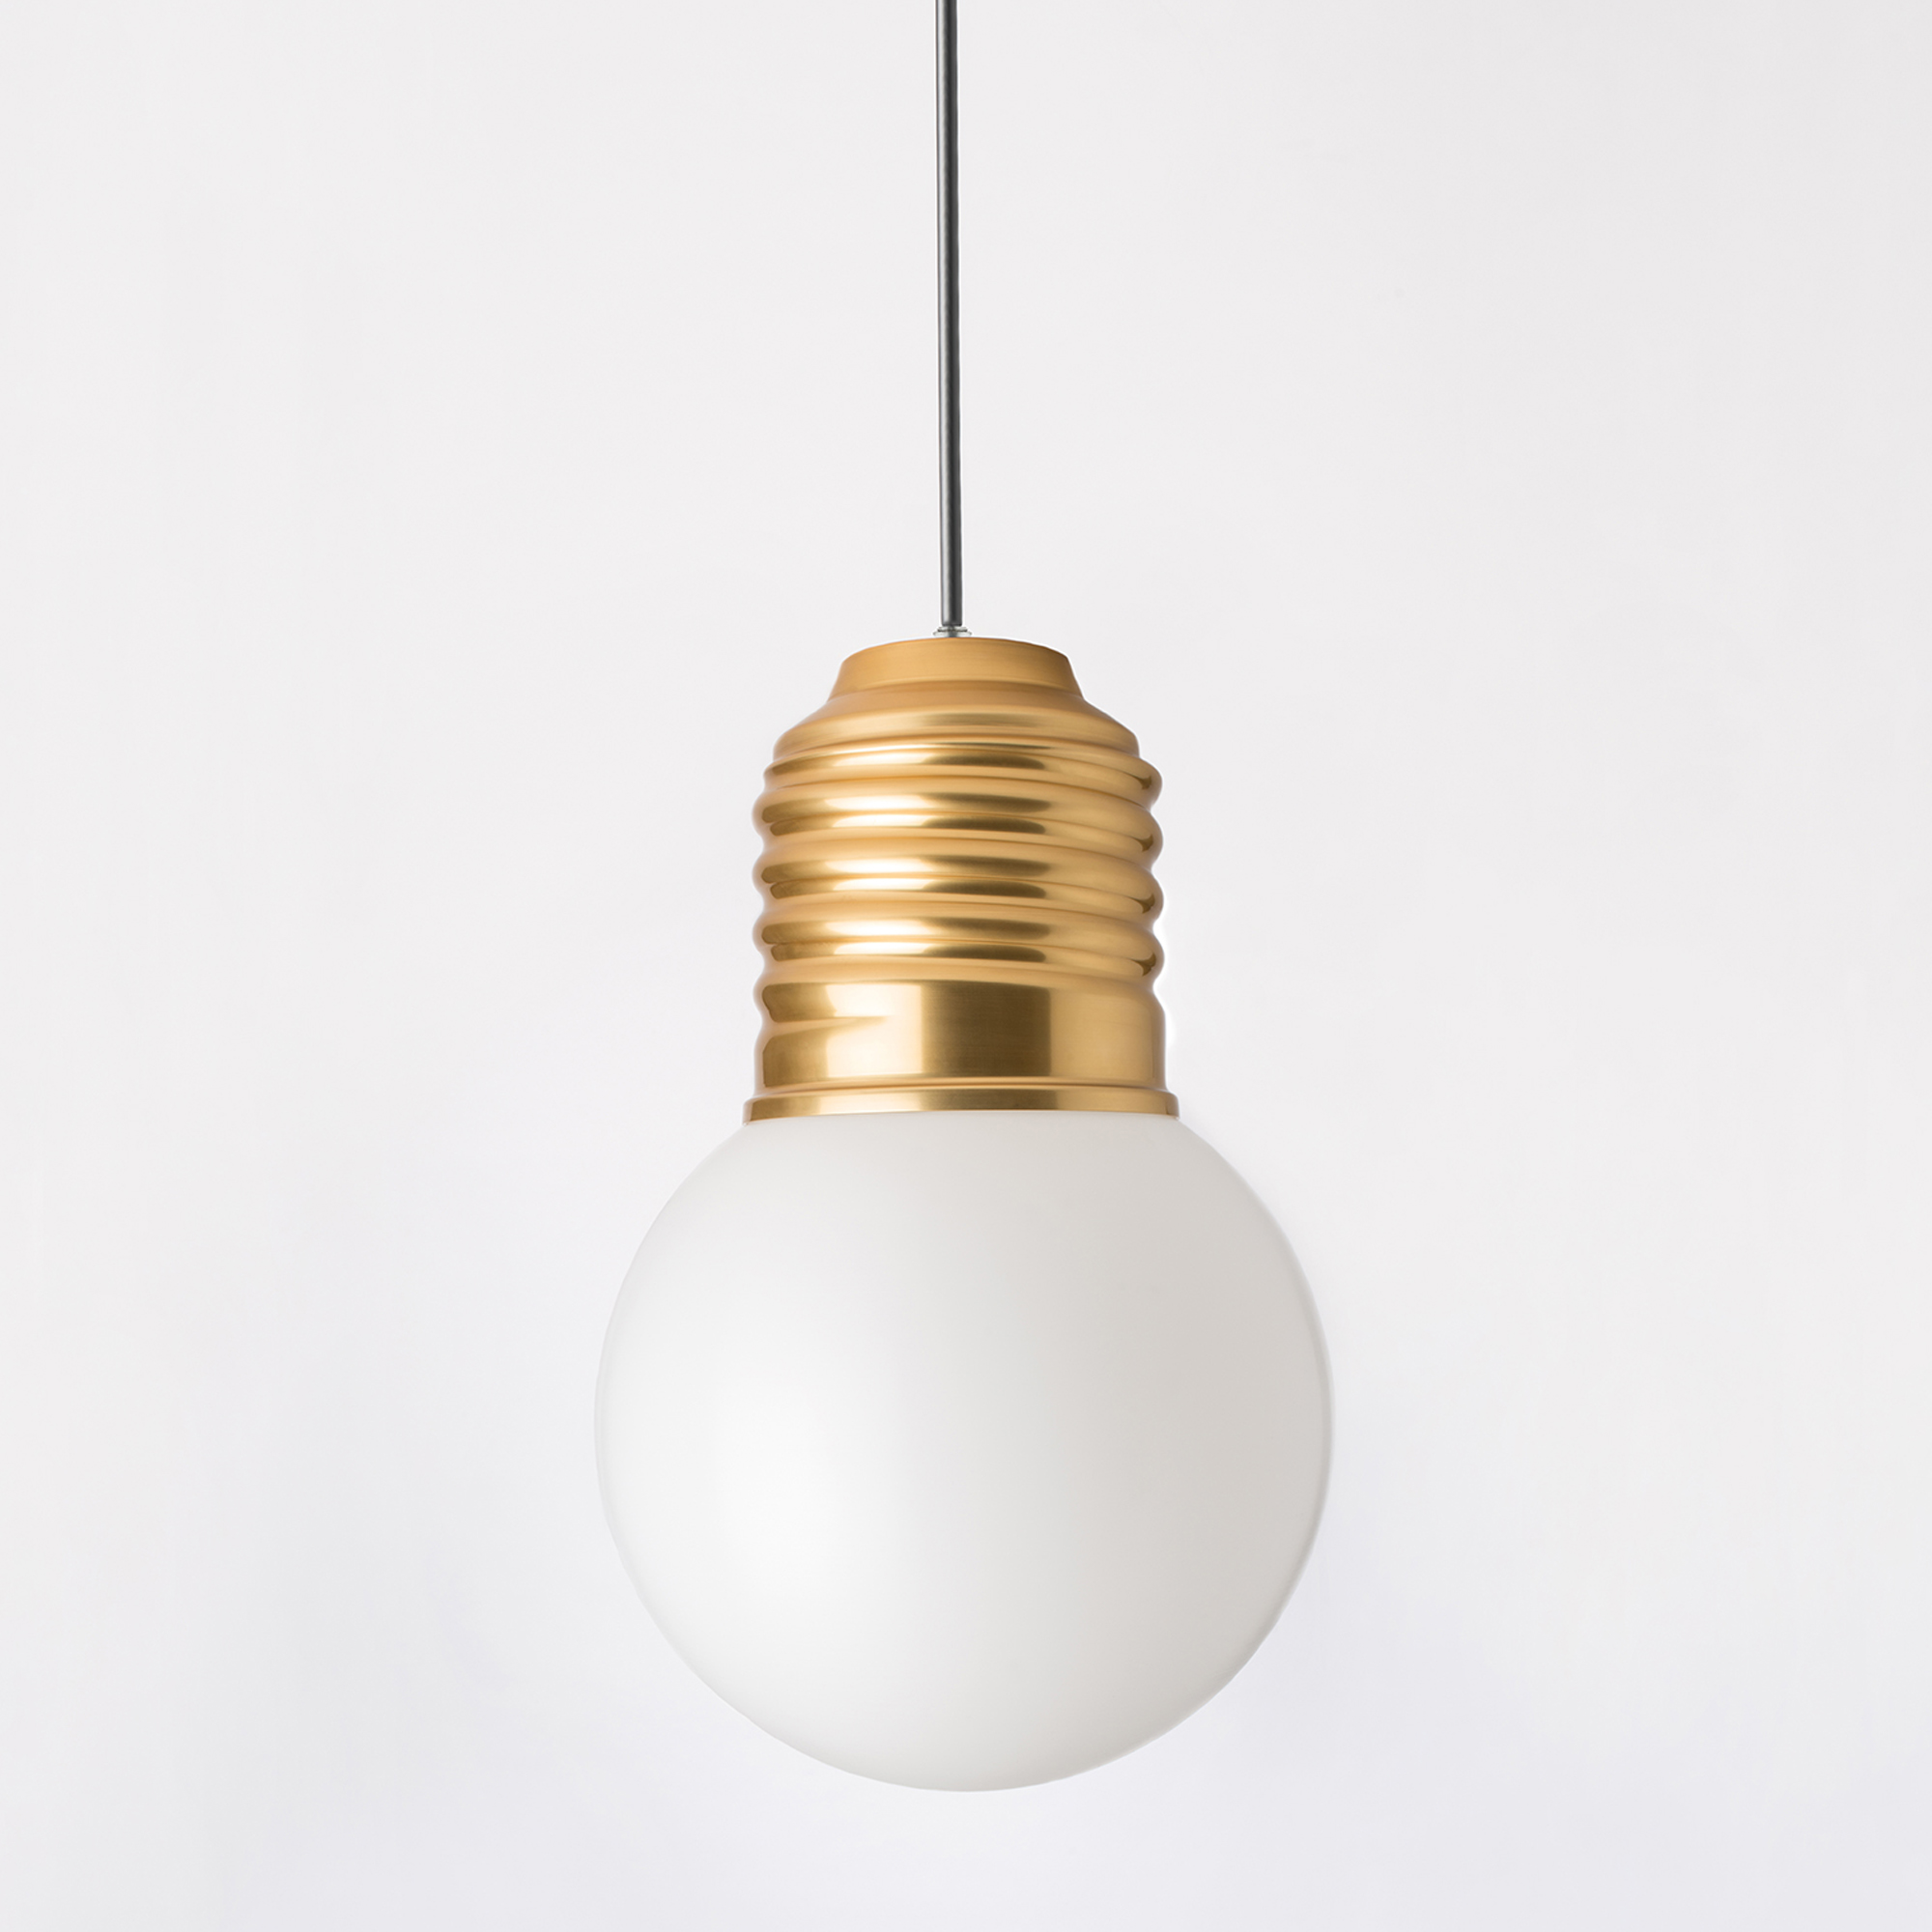 Lampe a suspendre BASIC Edison Or grand modèle Indoor